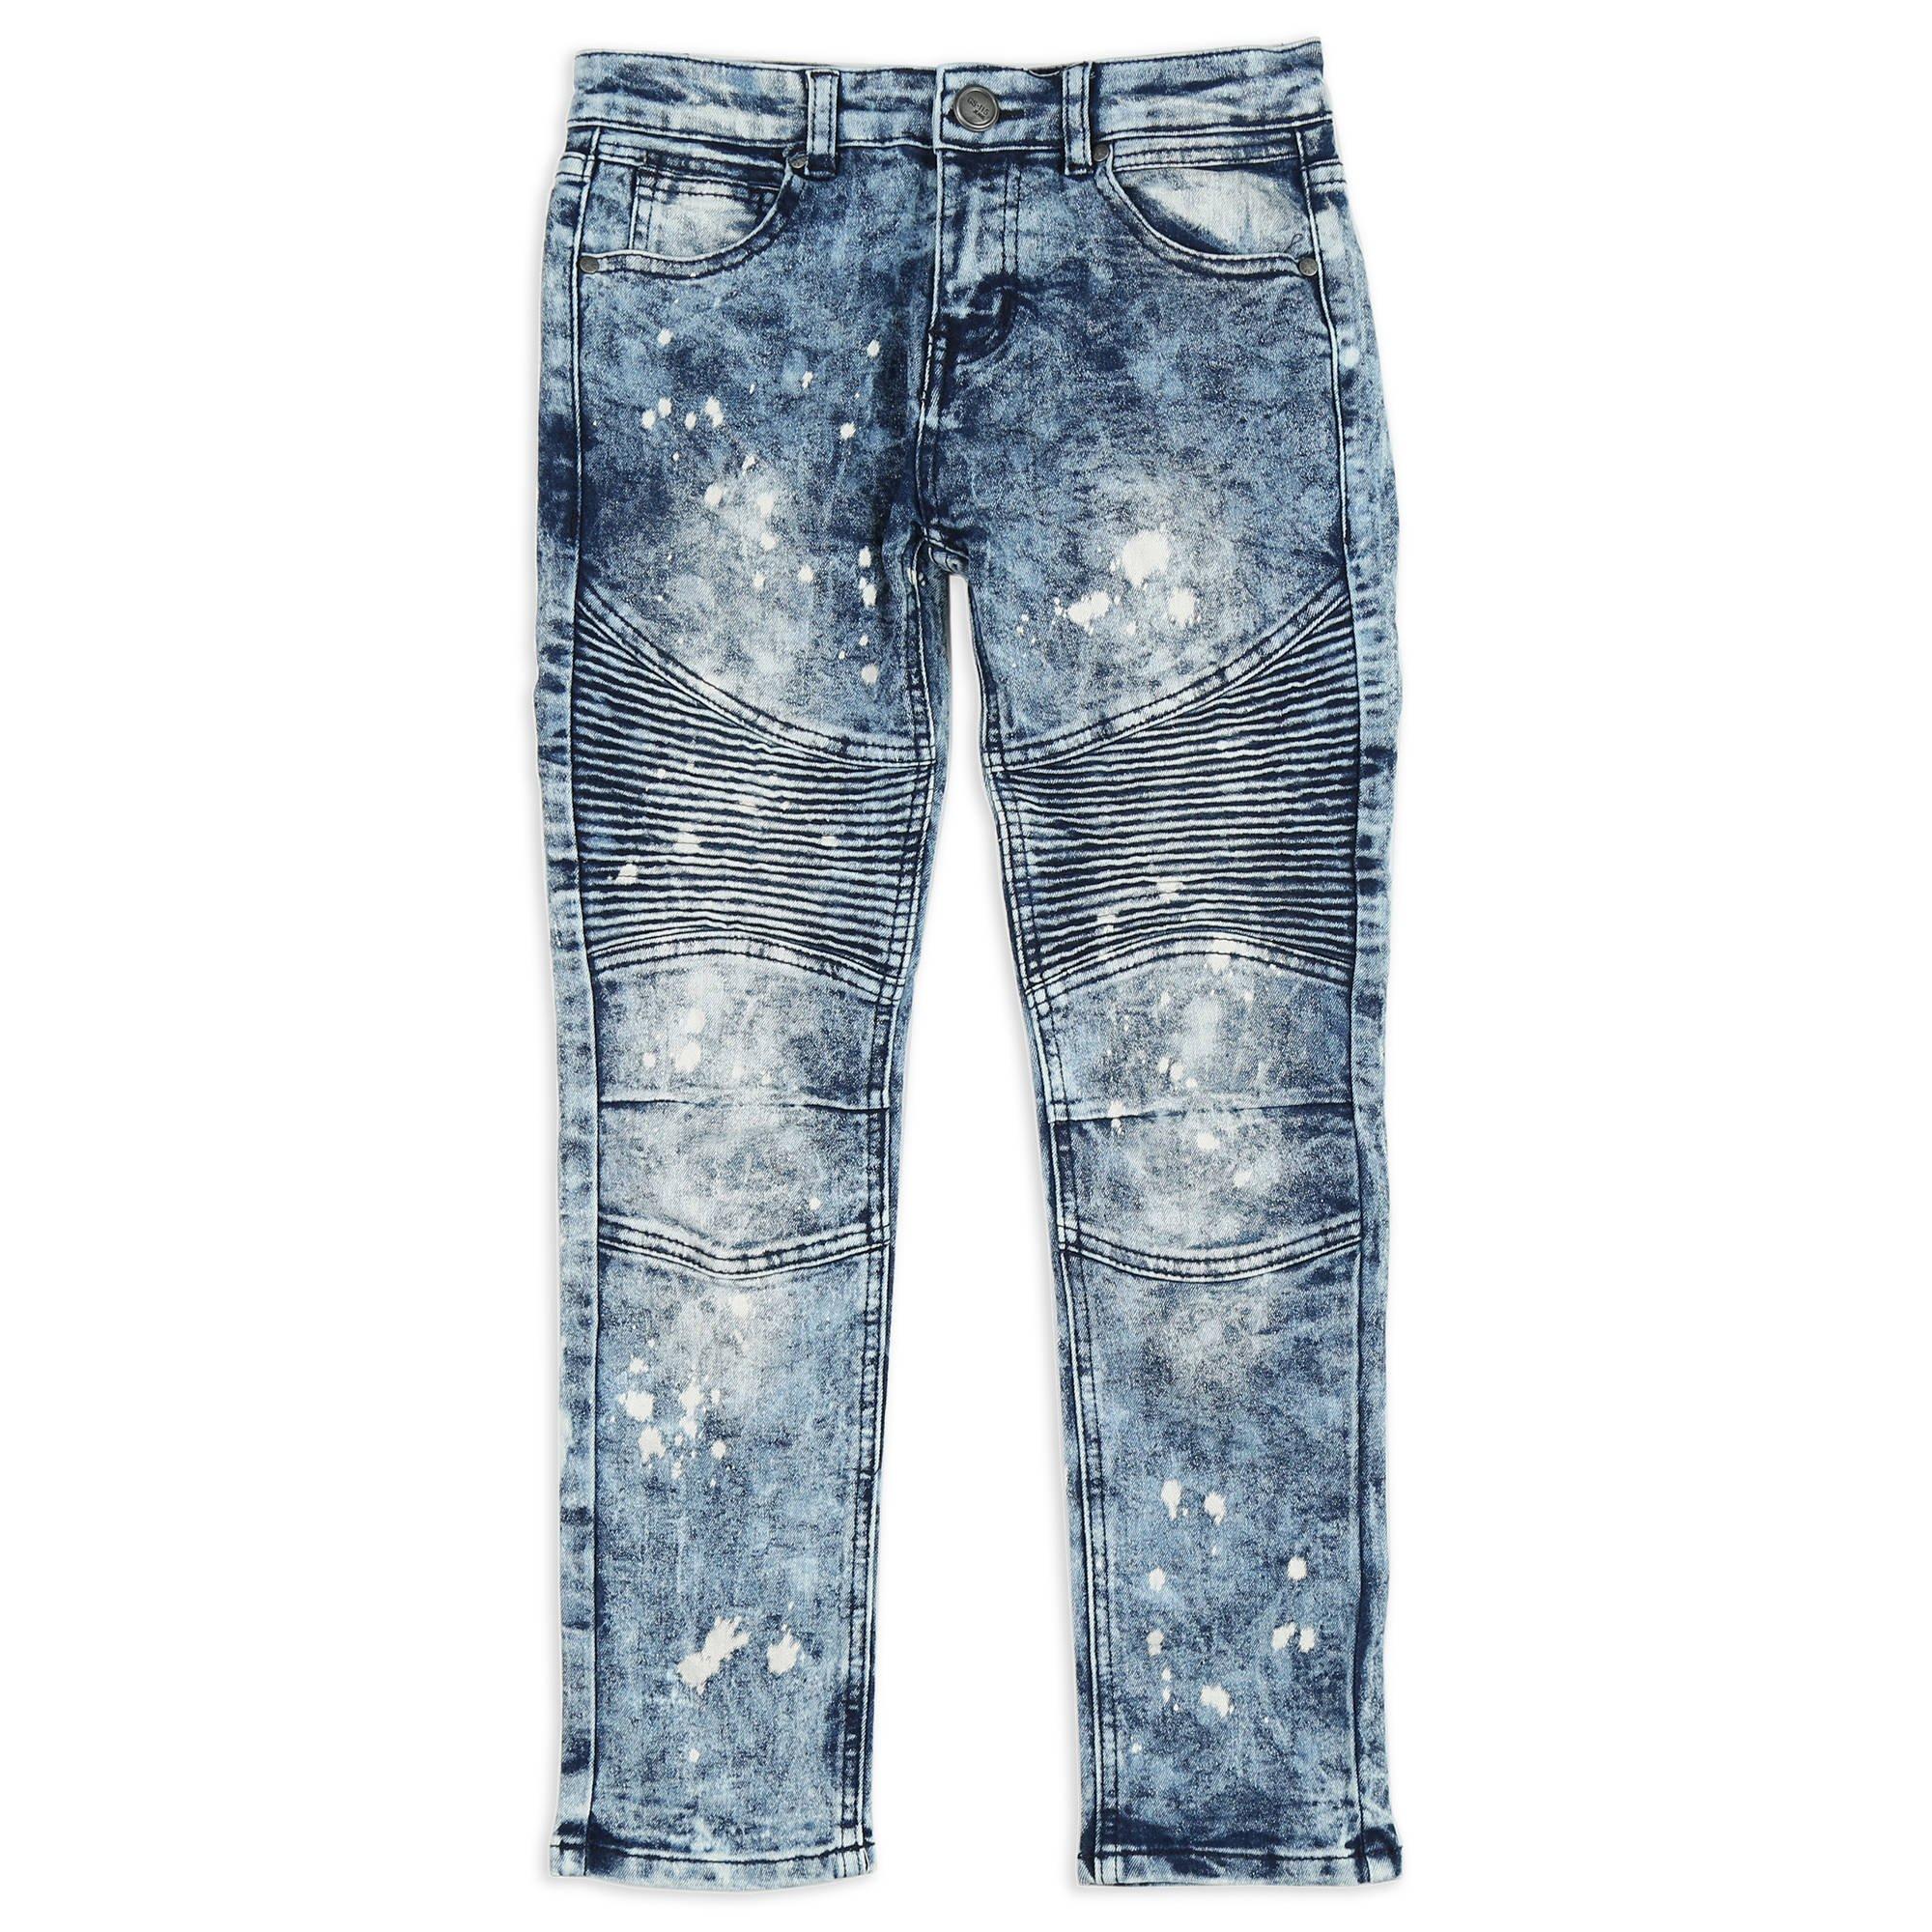 flipkart jeans price